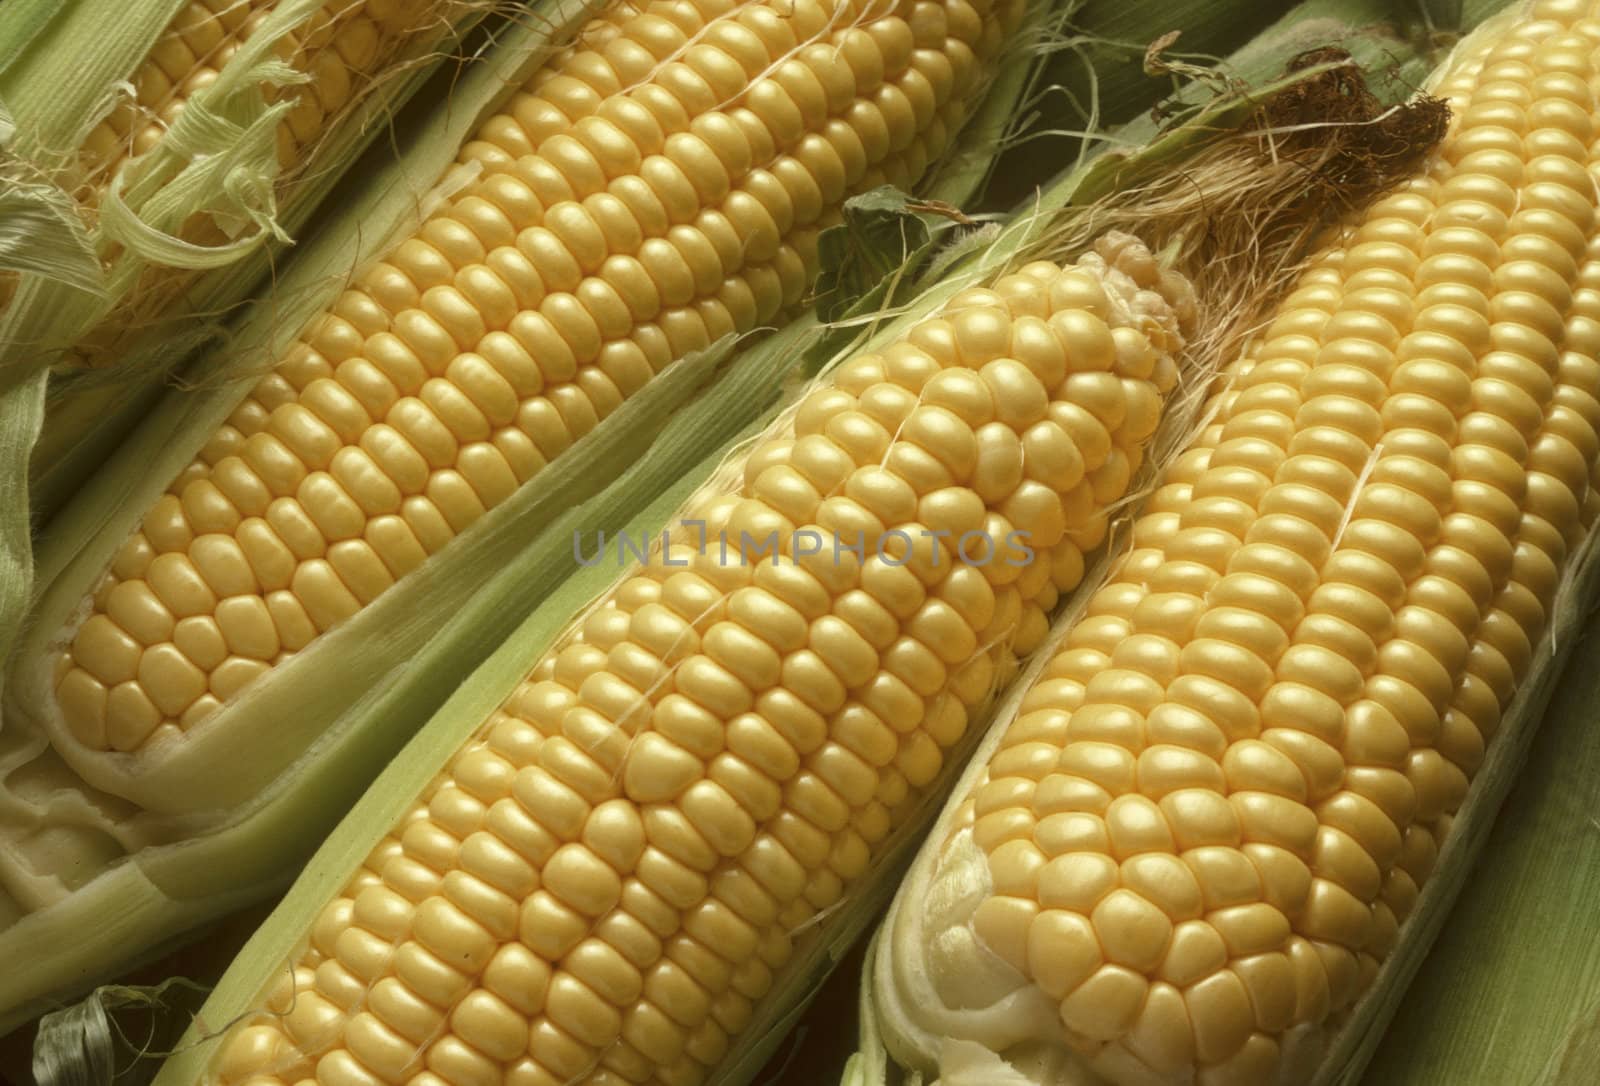 Ears of Sweet Corn or Maize Husked, Revealing Yellow Kernels